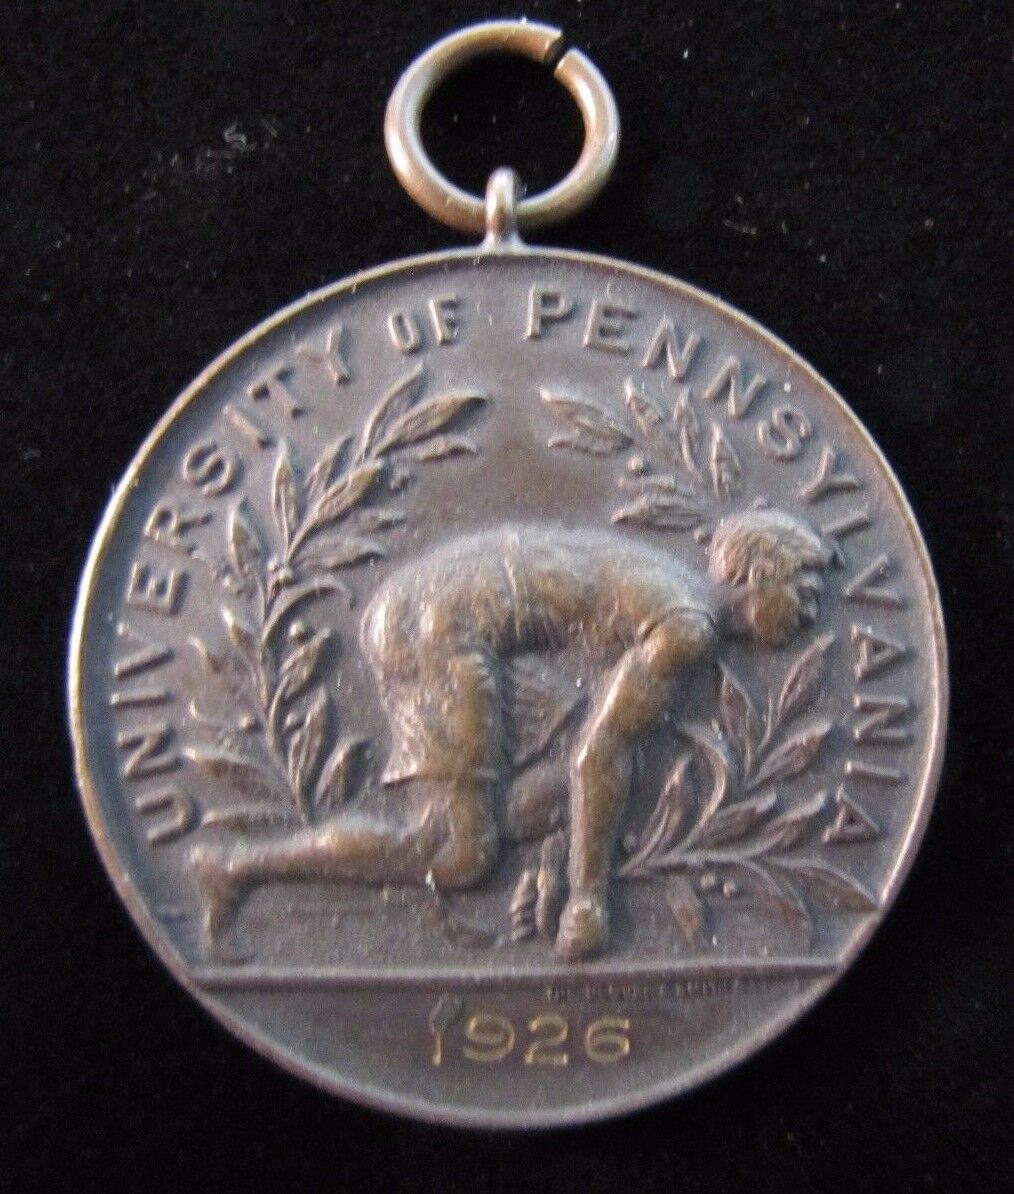 1926 UNIVERSITY of PENNSYLVANIA TRACK & FIELD HIGH JUMP Award Medallion